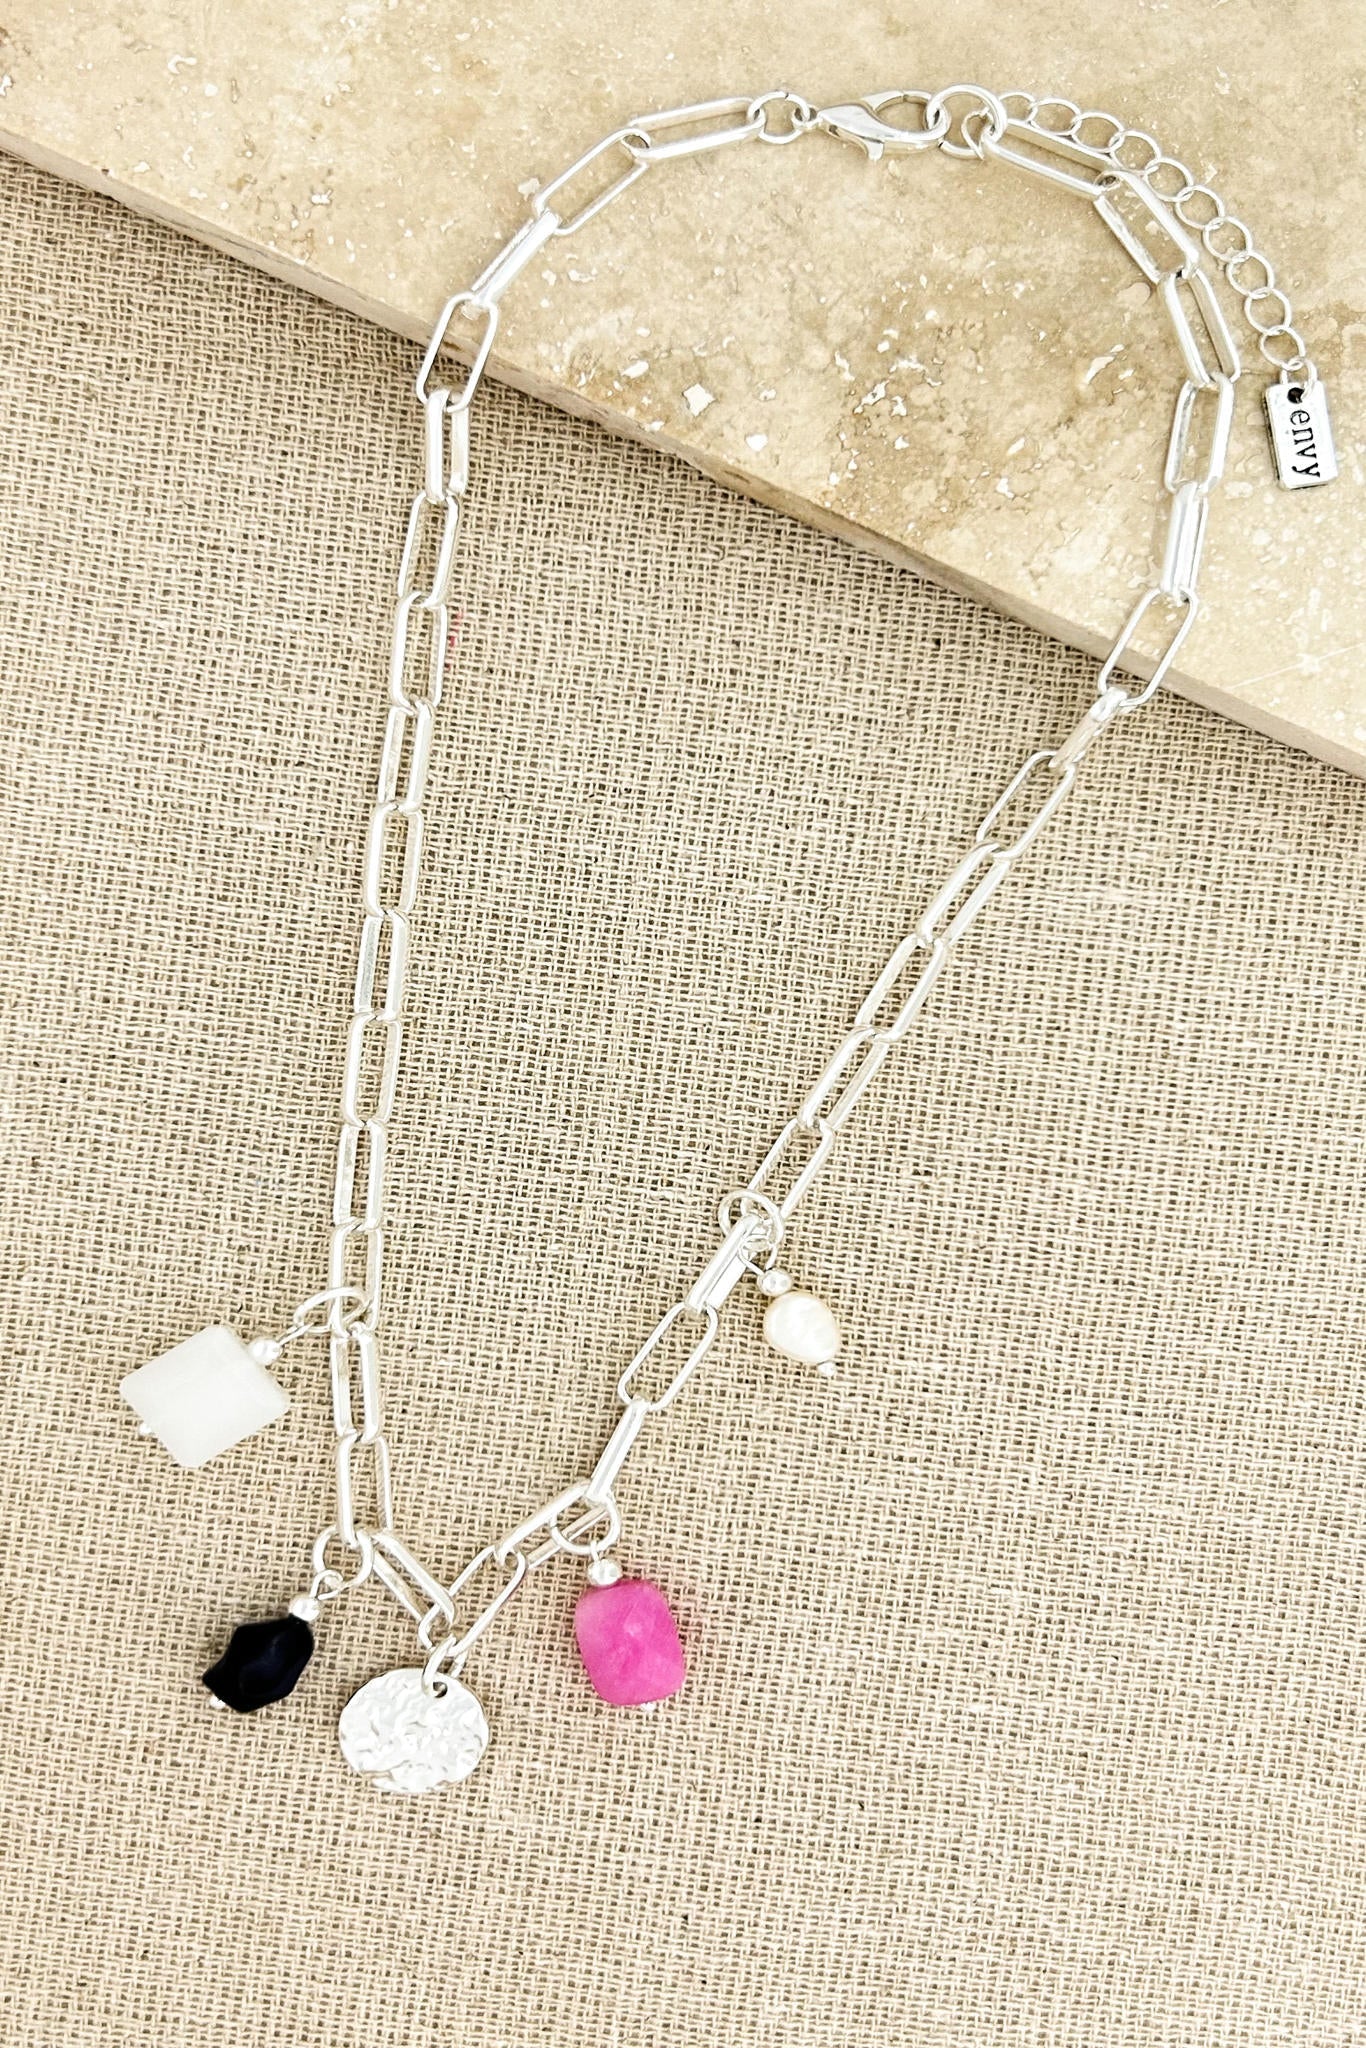 Silver, Pink, Black & White Pendant Necklace